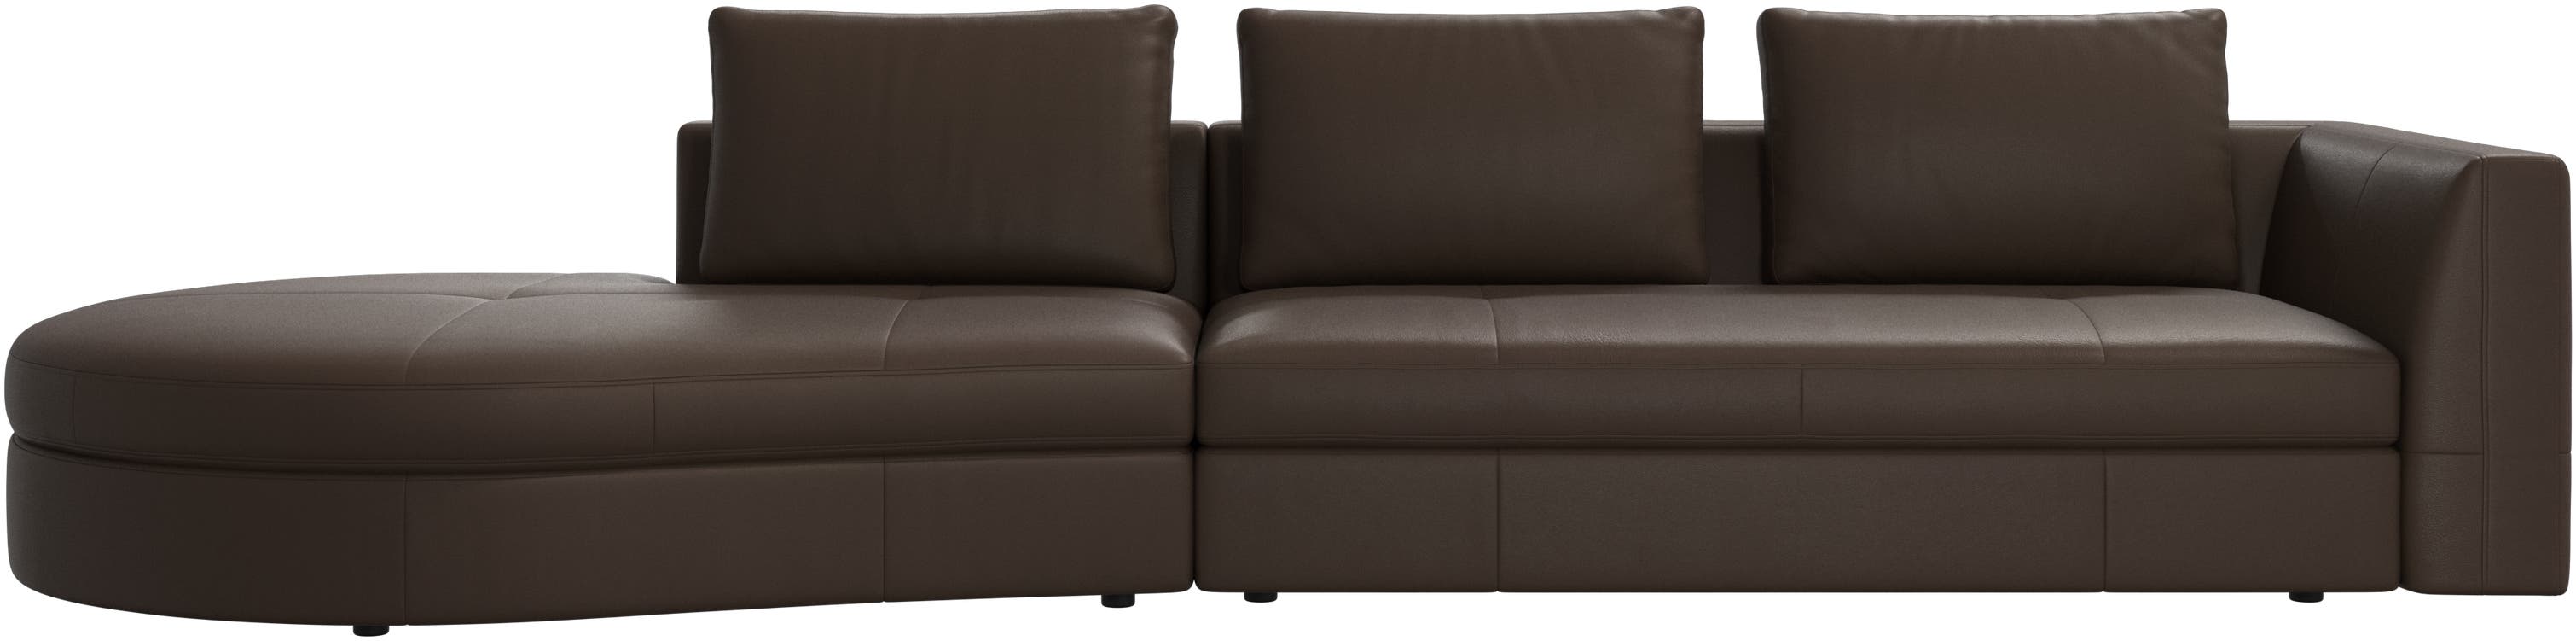 Bergamo sofa with round lounging unit, left